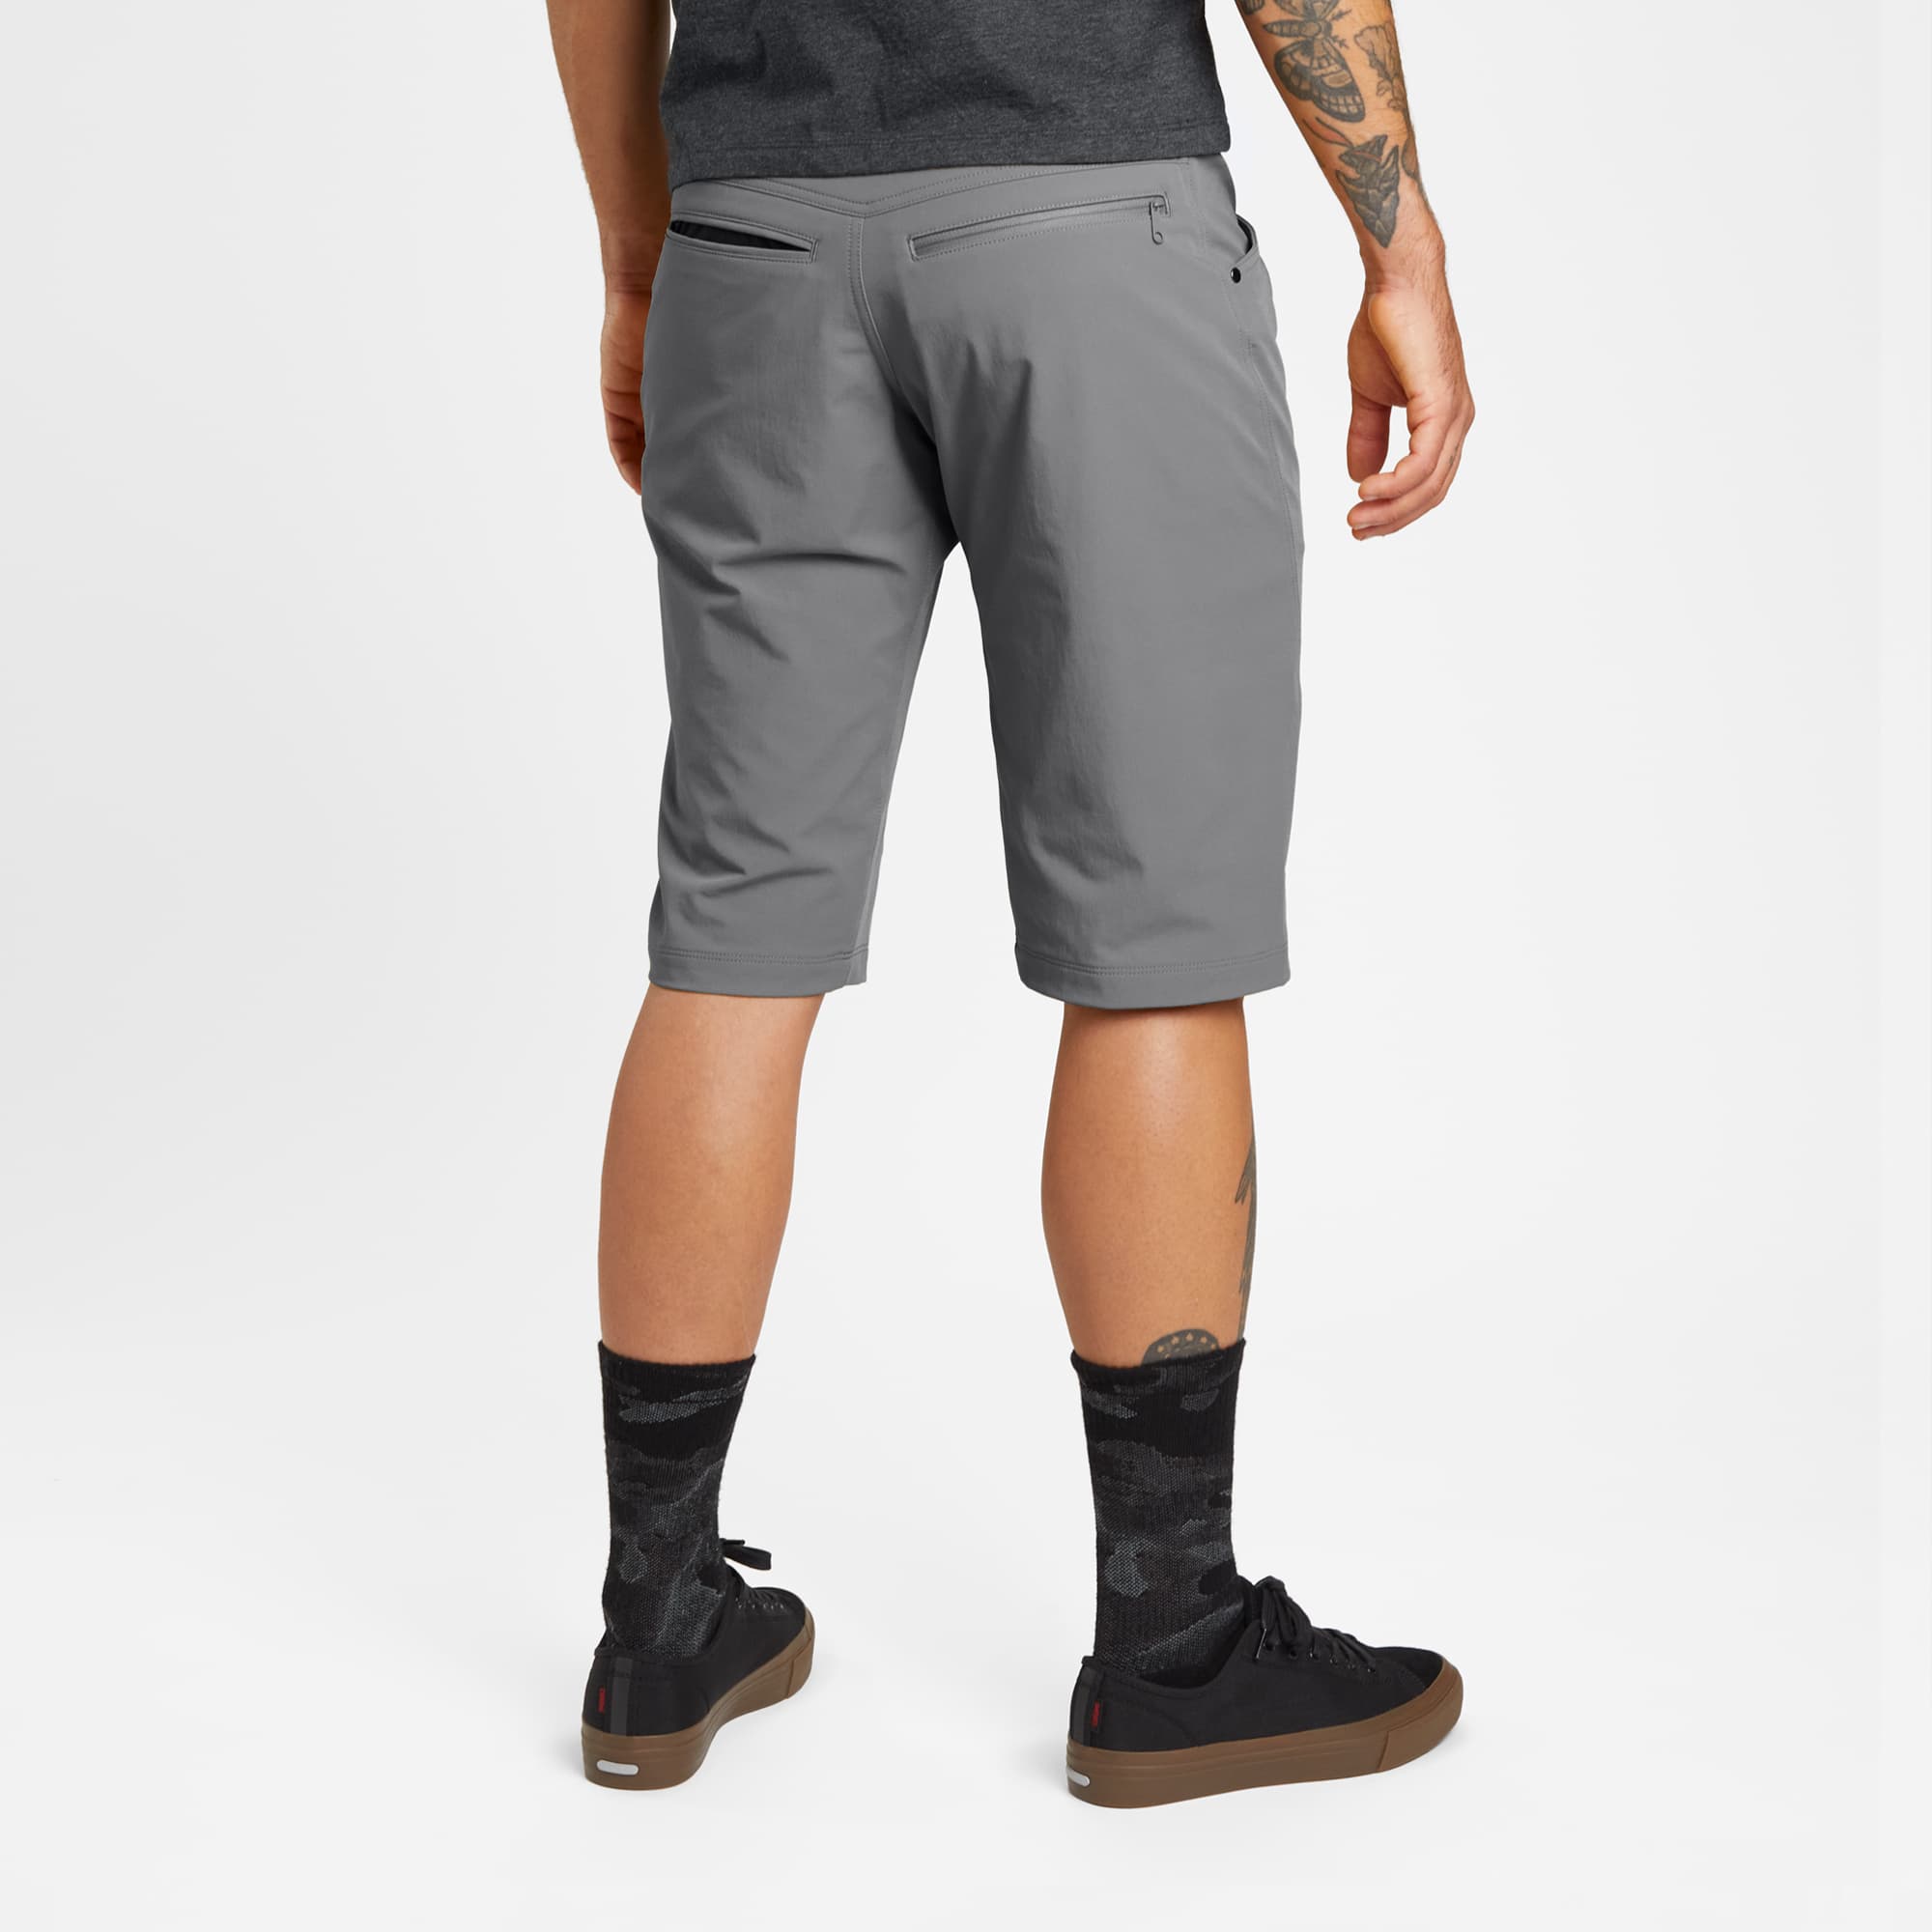 Men's Union Short 14" inseam in grey worn by a man #color_castle rock